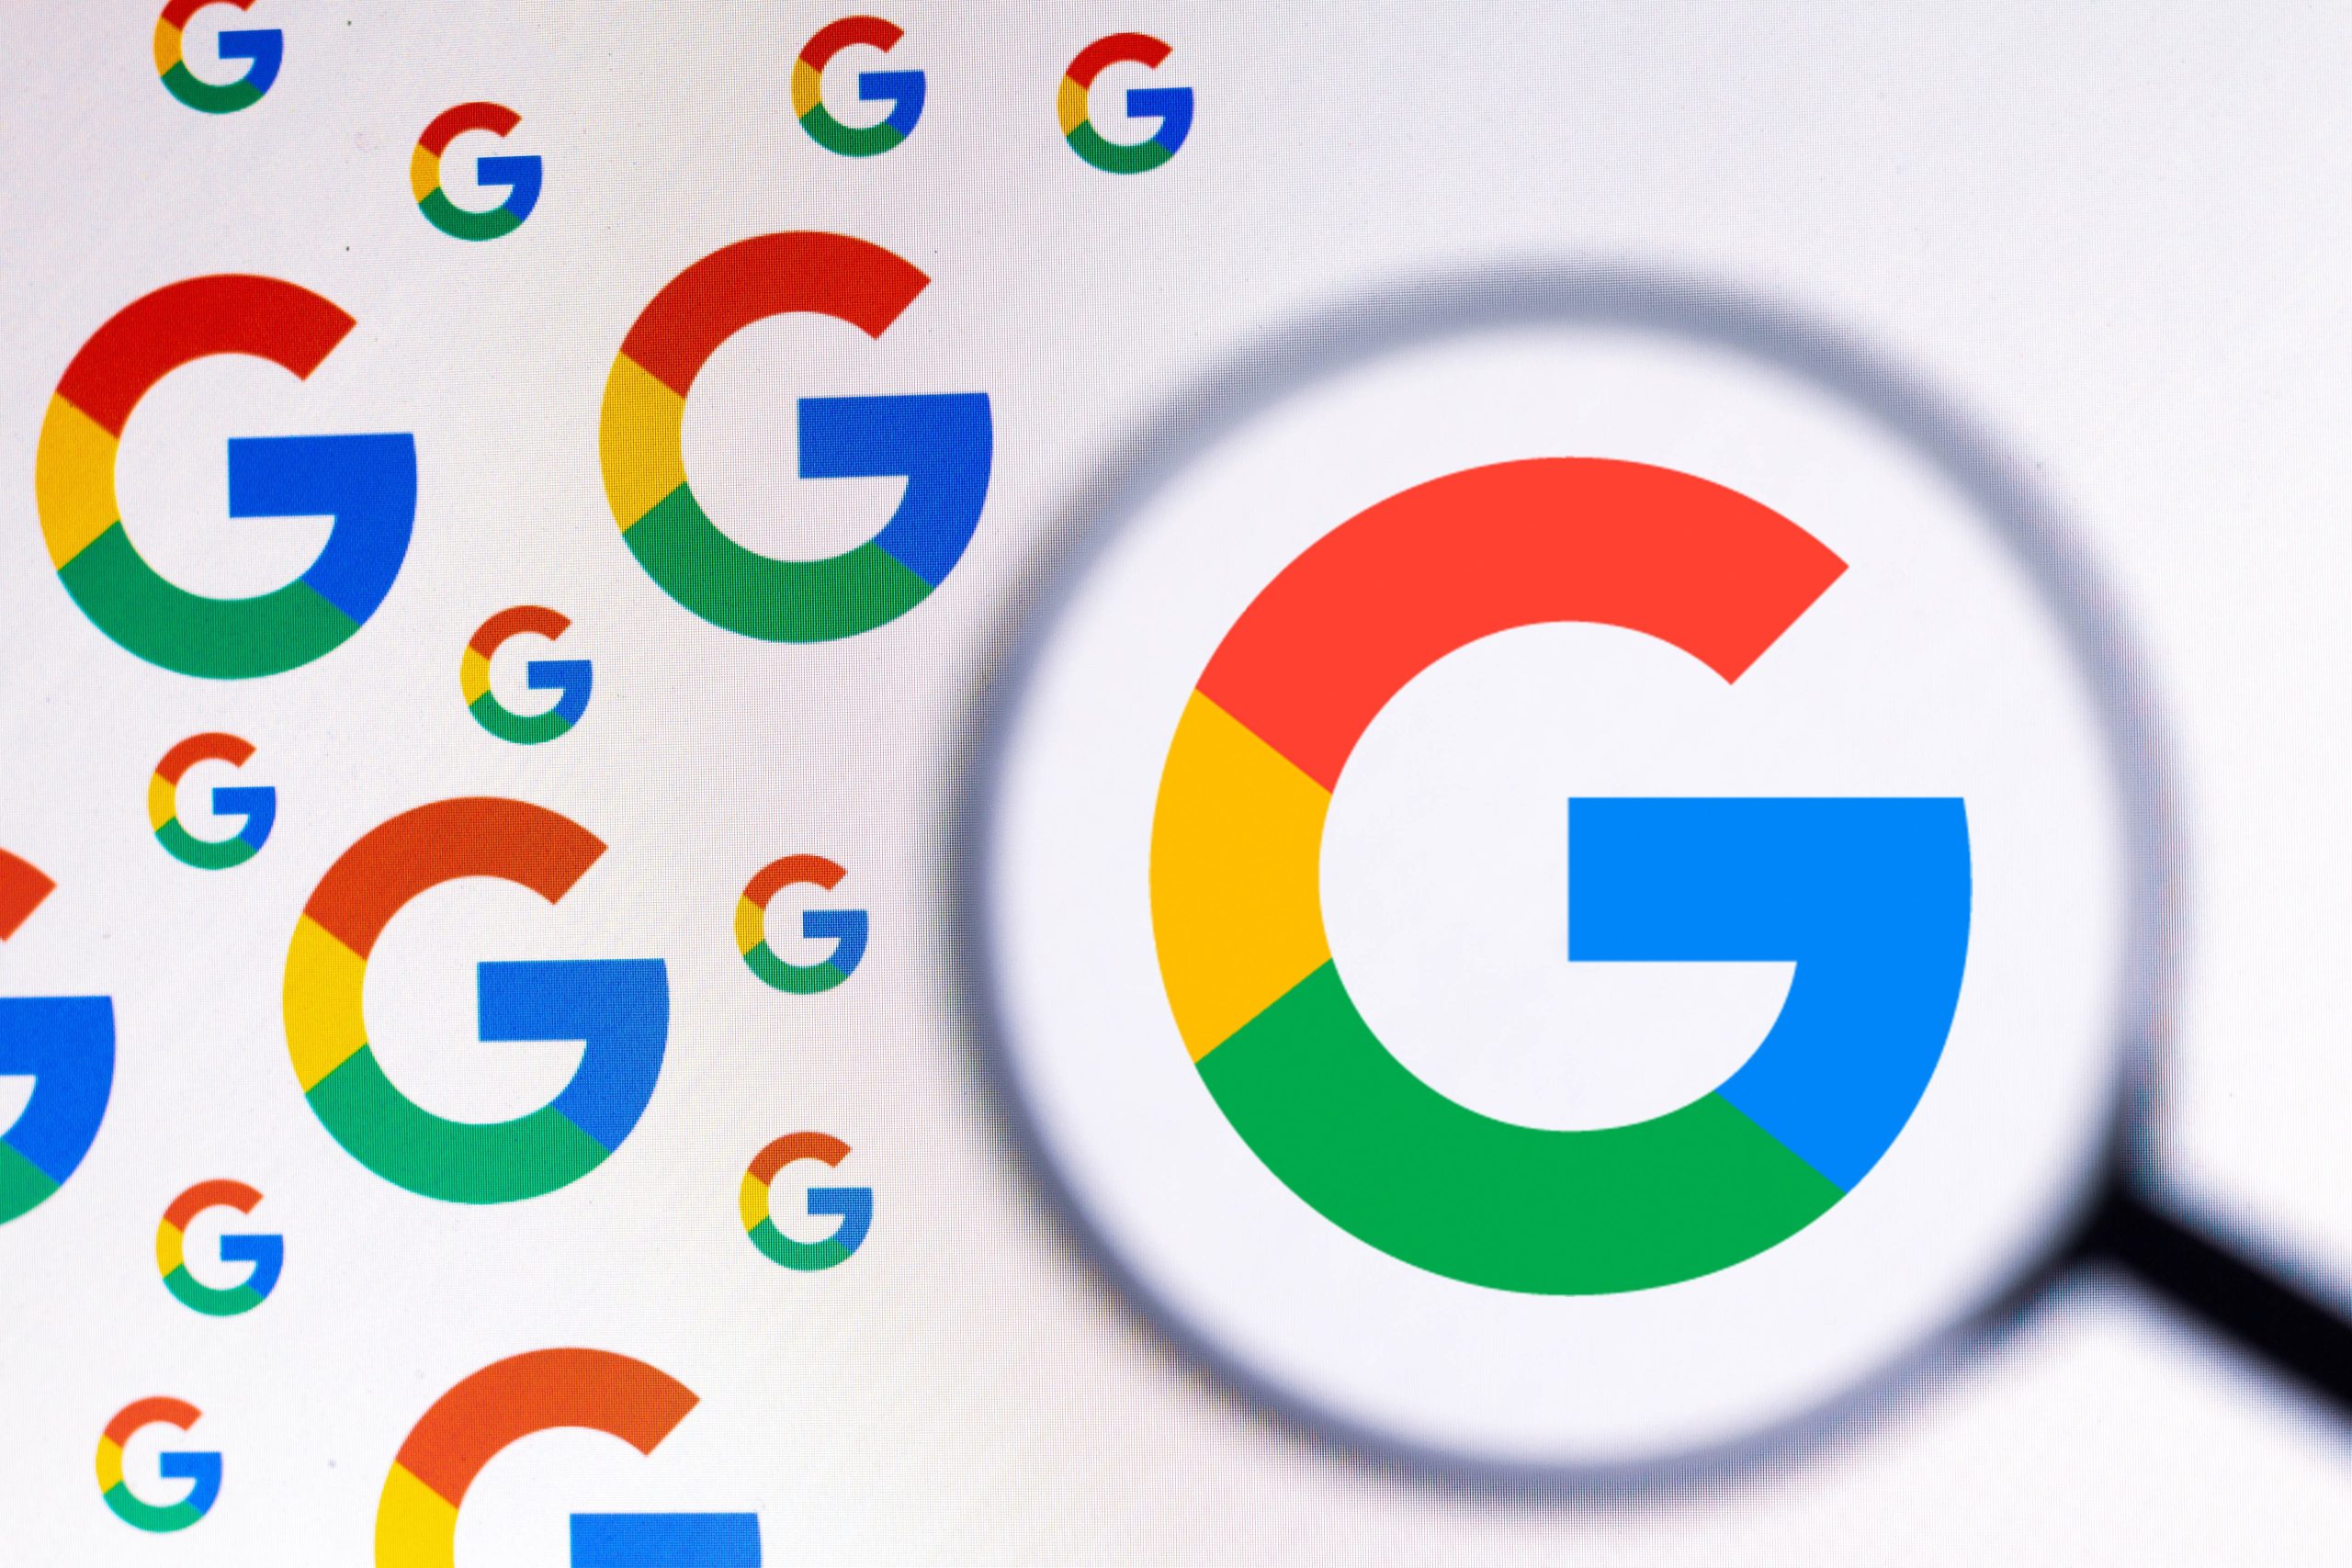 Google logos under a magnifying glass.